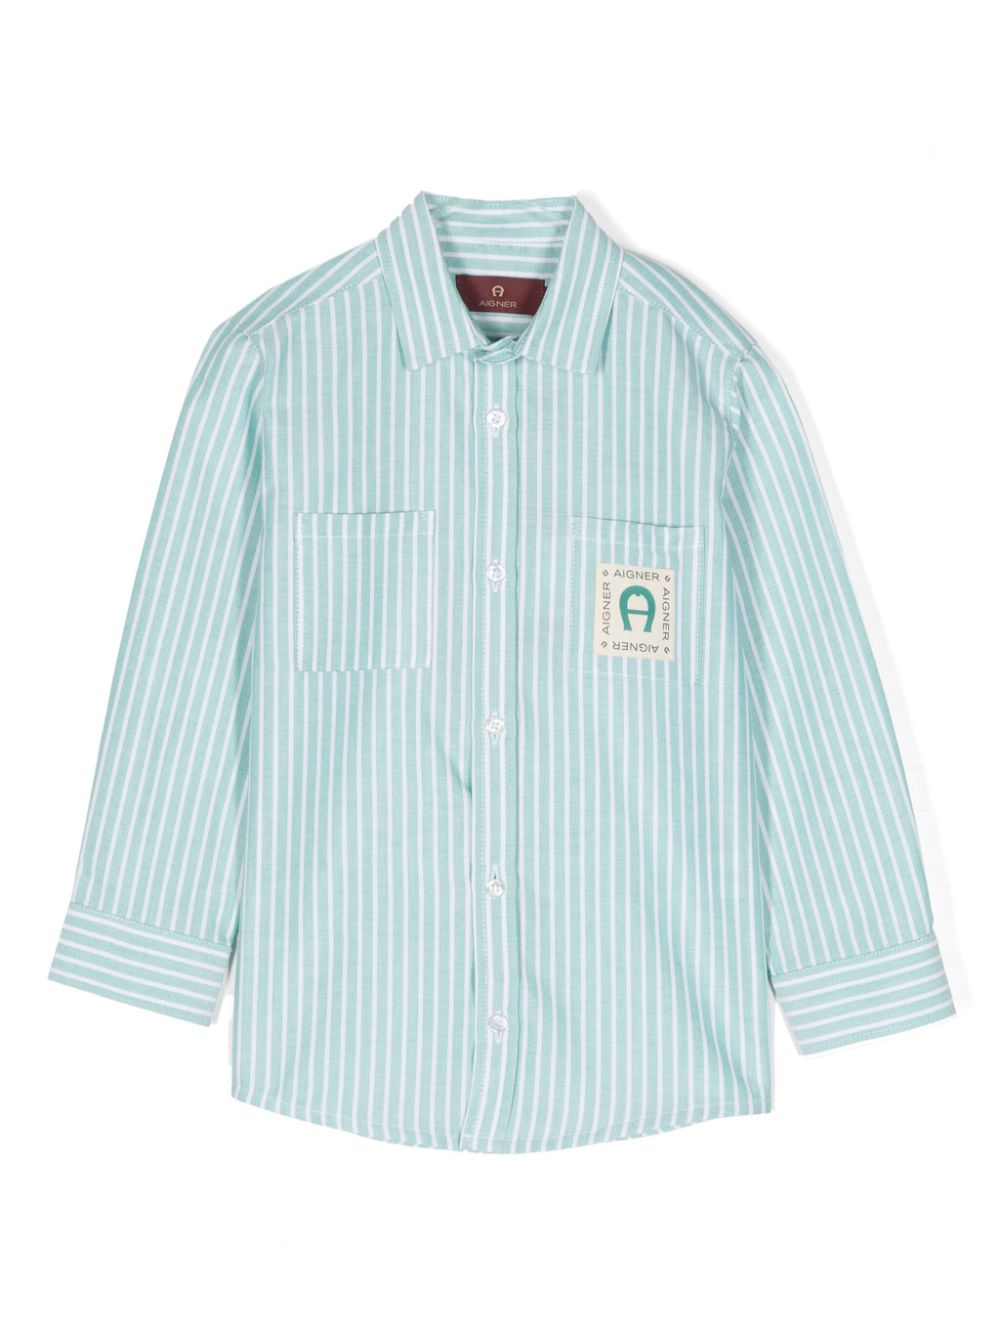 Aigner Teen Boys Green Striped Cotton Shirt